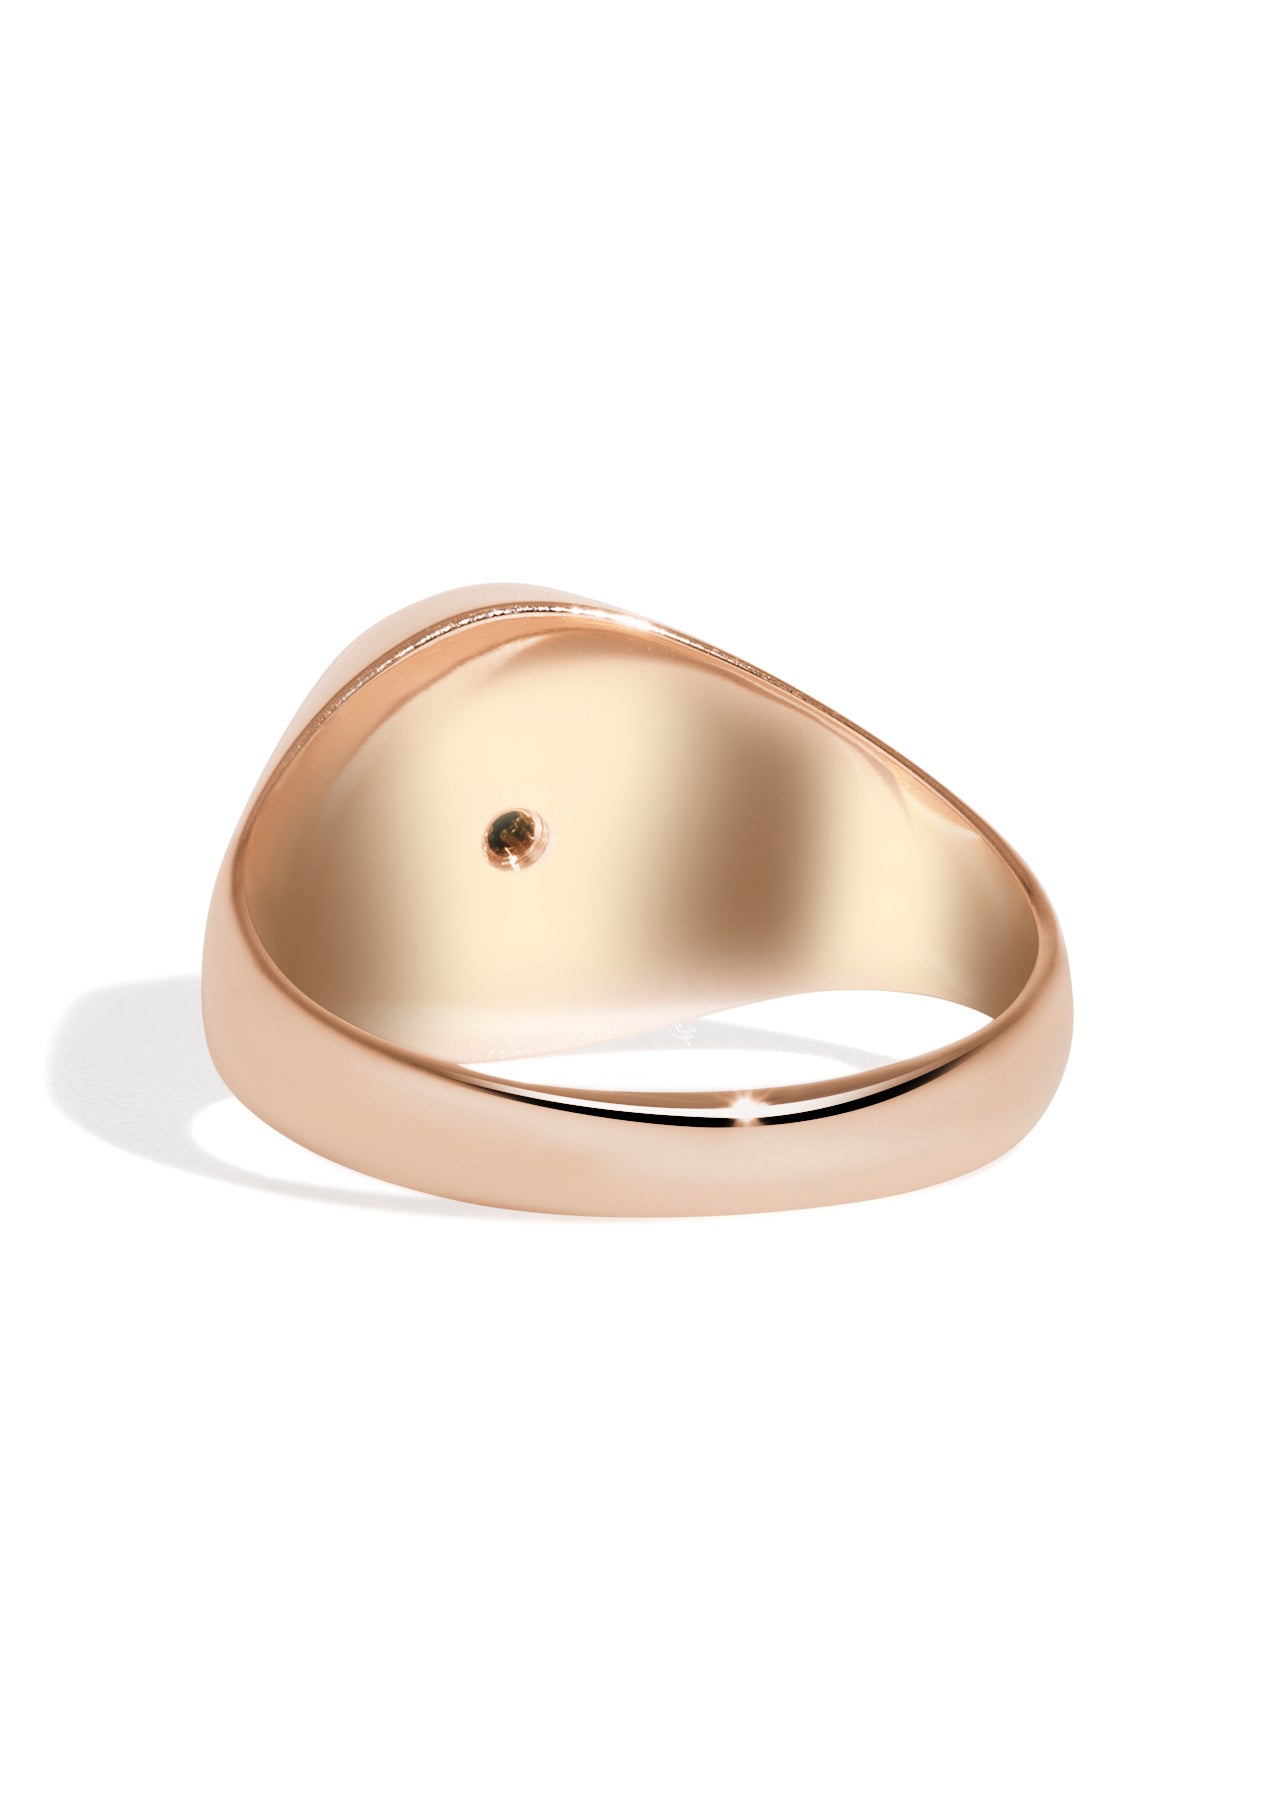 The Apollo Rose Gold Signet Ring